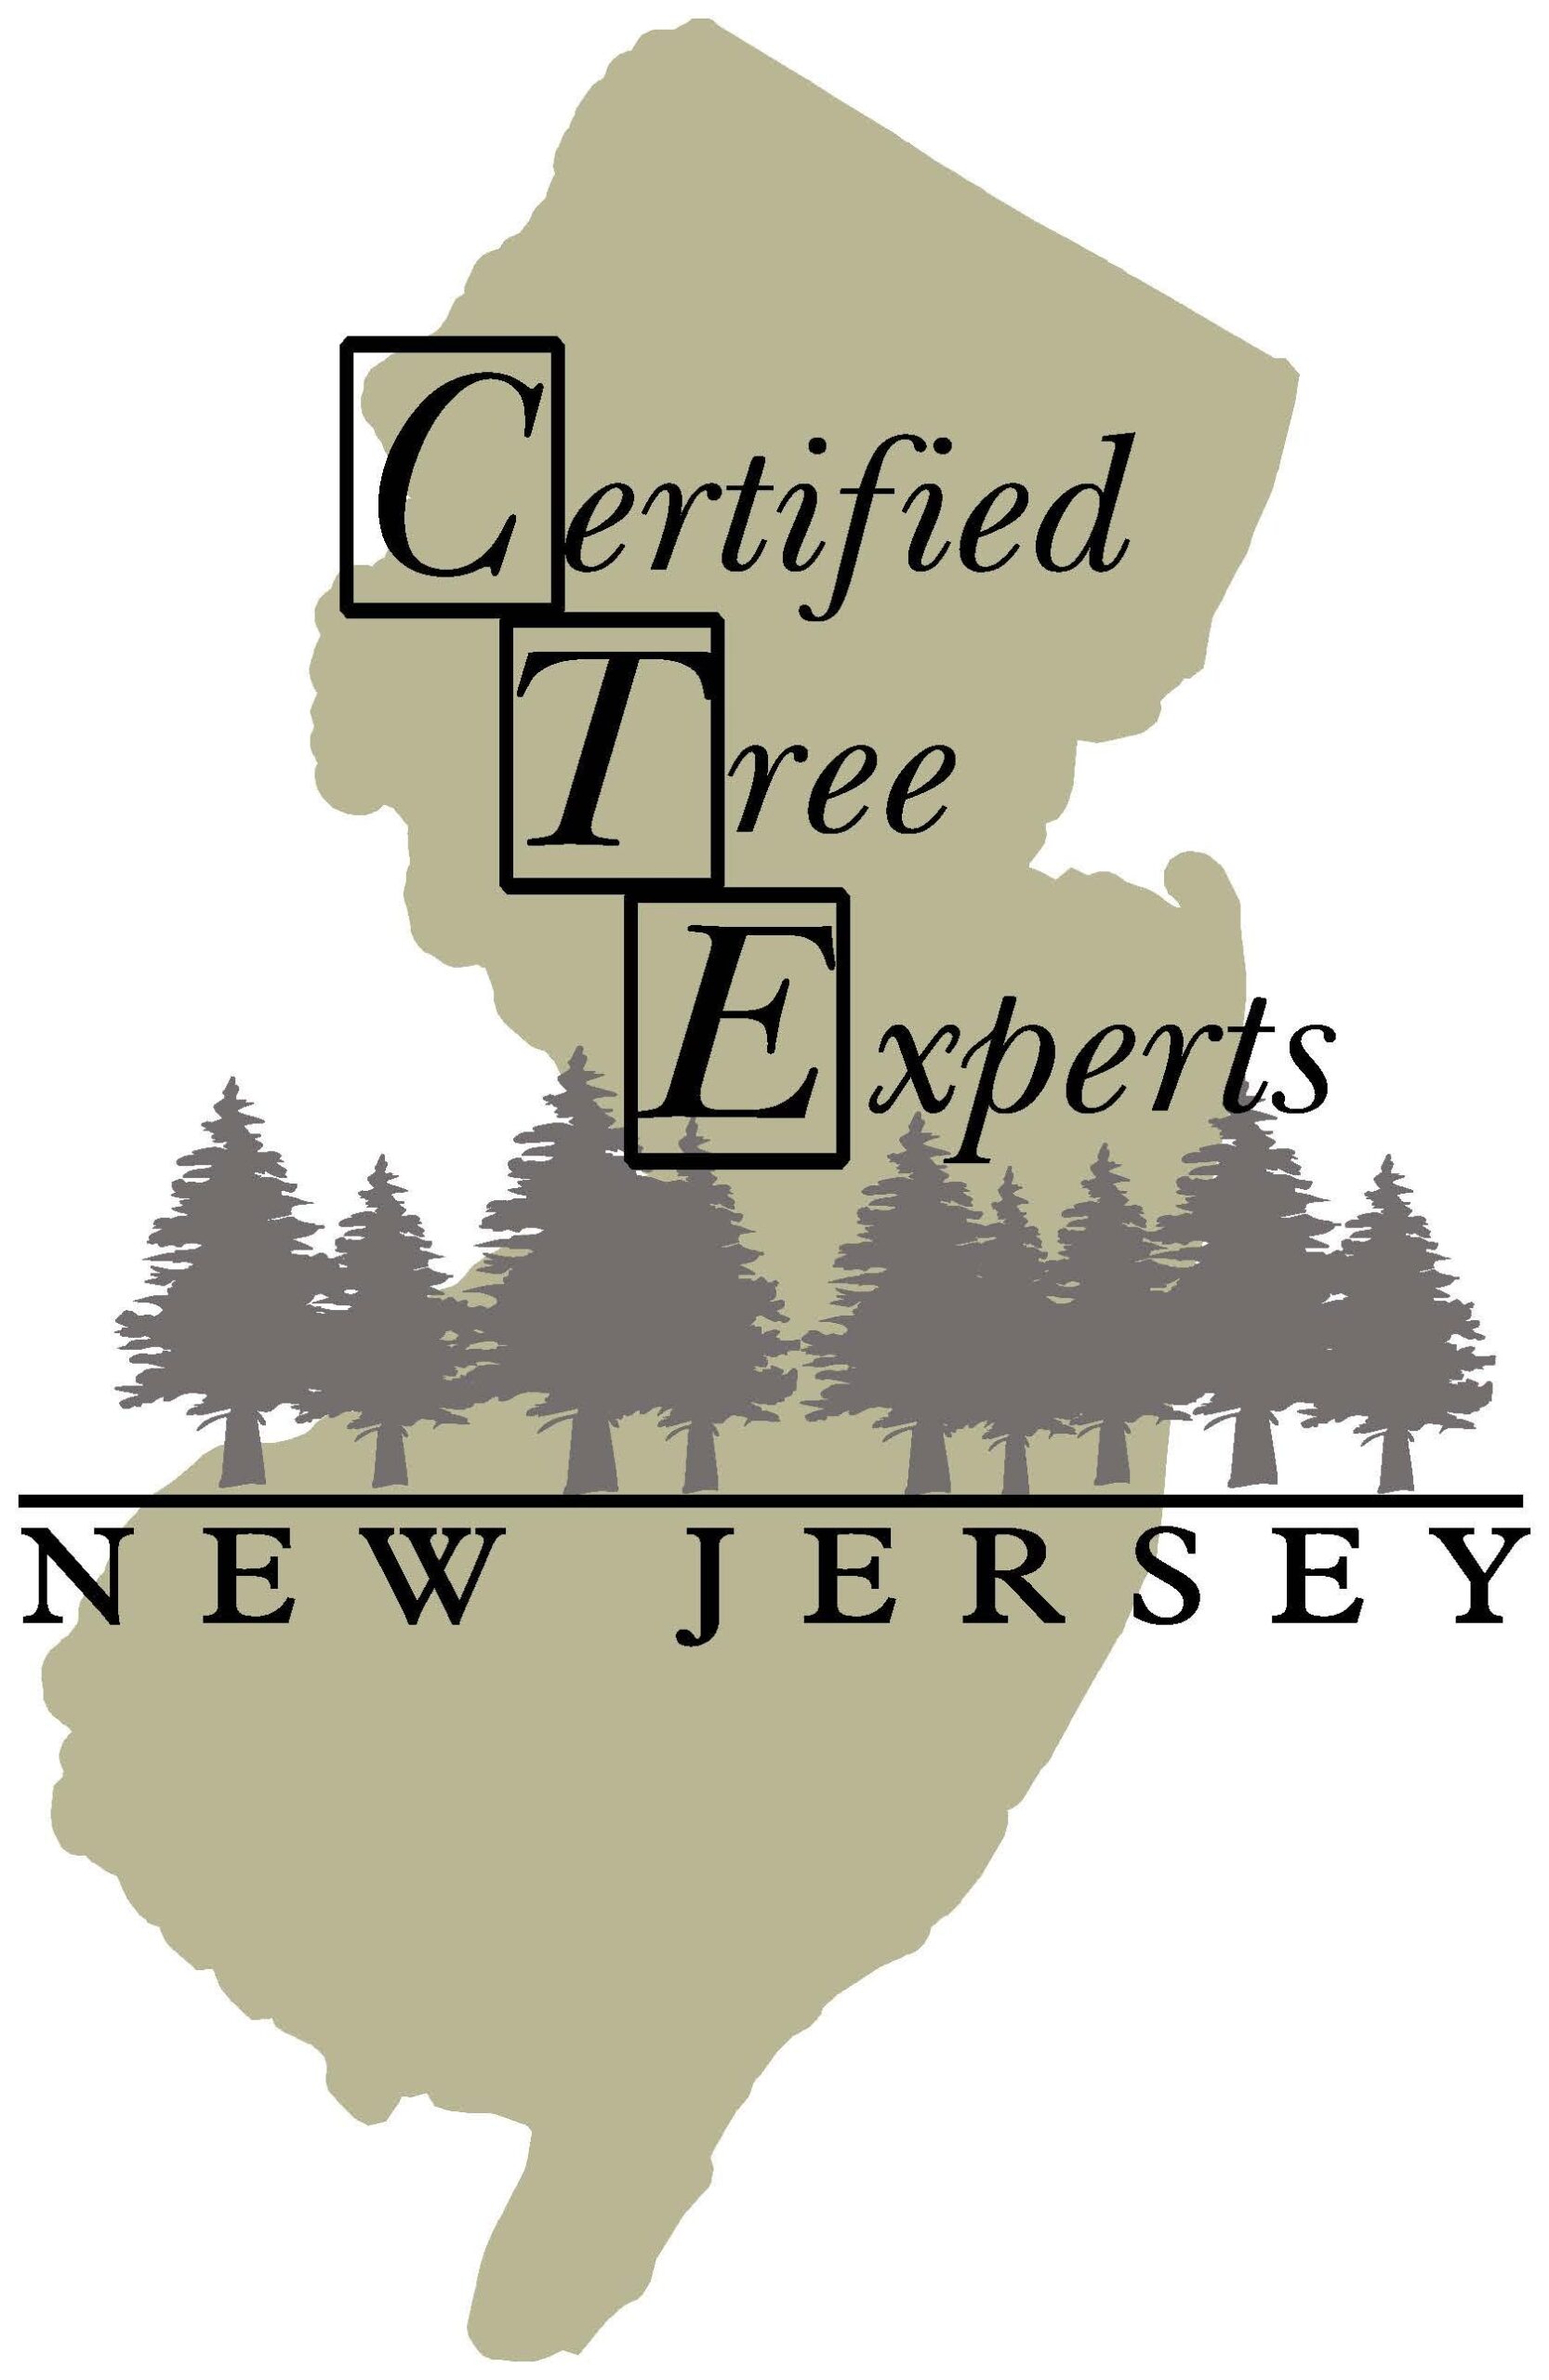 New Jersey Licensed Tree Expert logo.